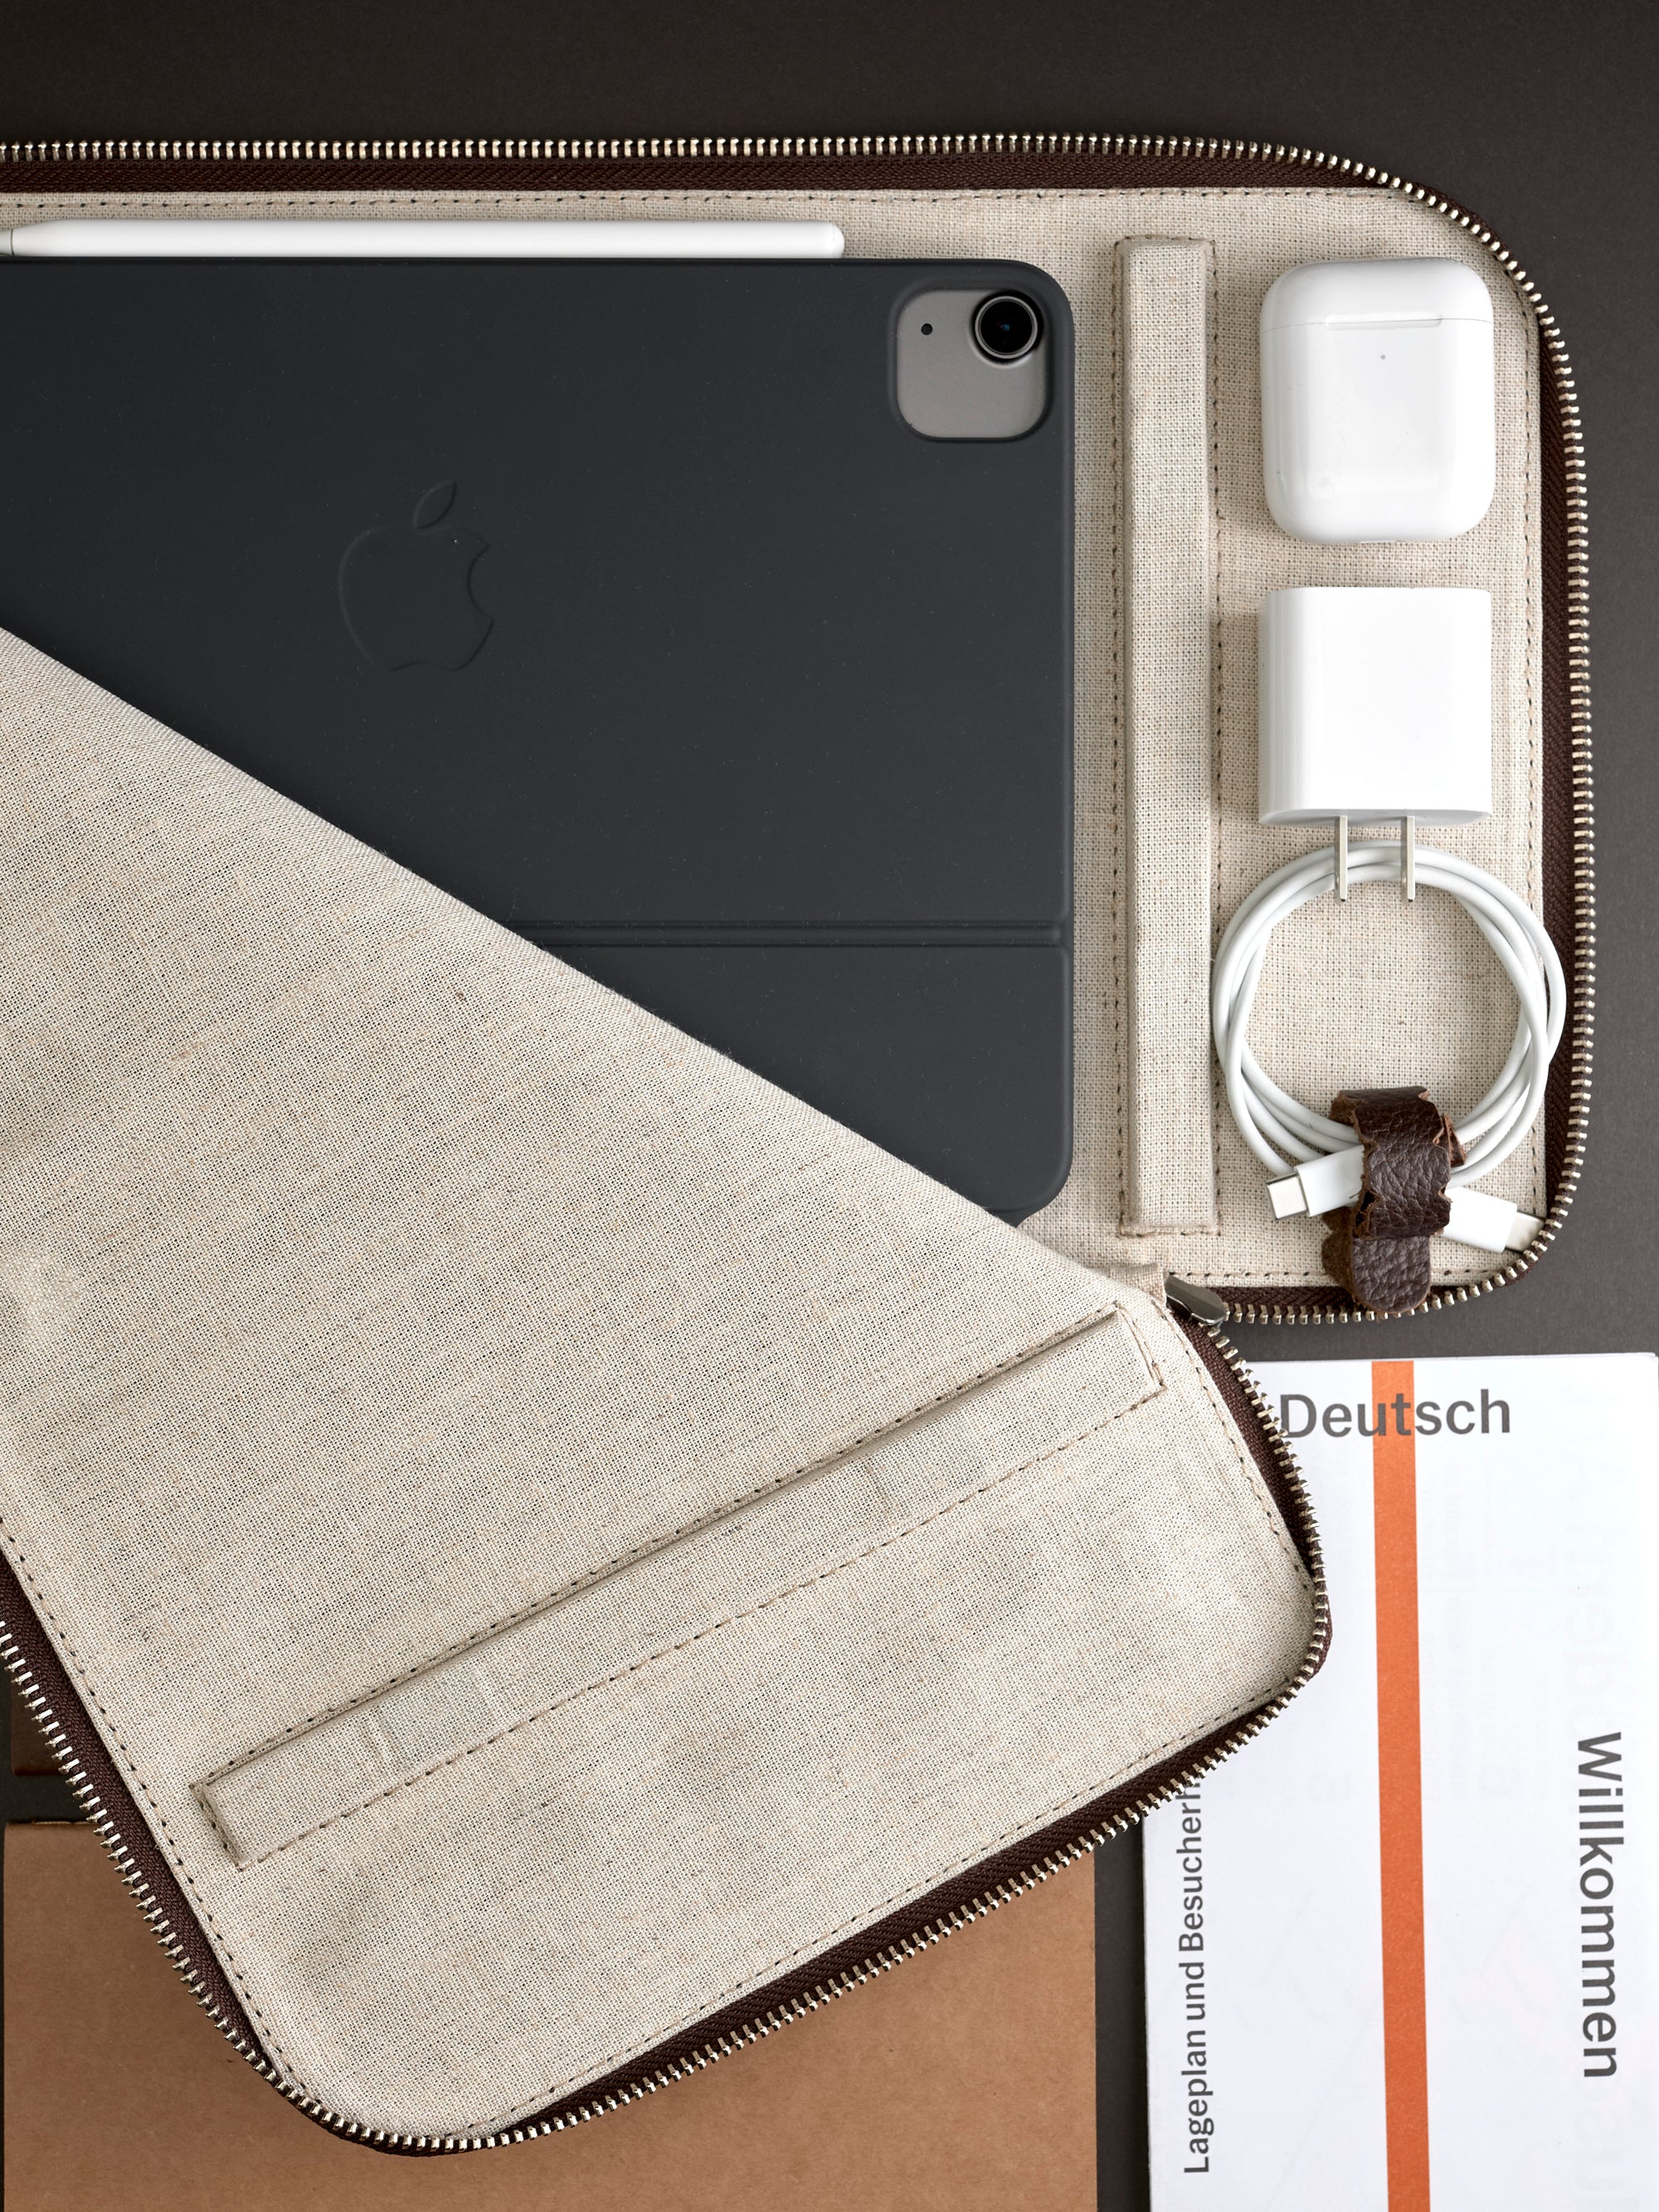 Linen interior. Draftsman 6 iPad Case Dark Brown, iPad Pro 11-inch, iPad Pro 12.9-inch, M1 Chip by Capra Leather